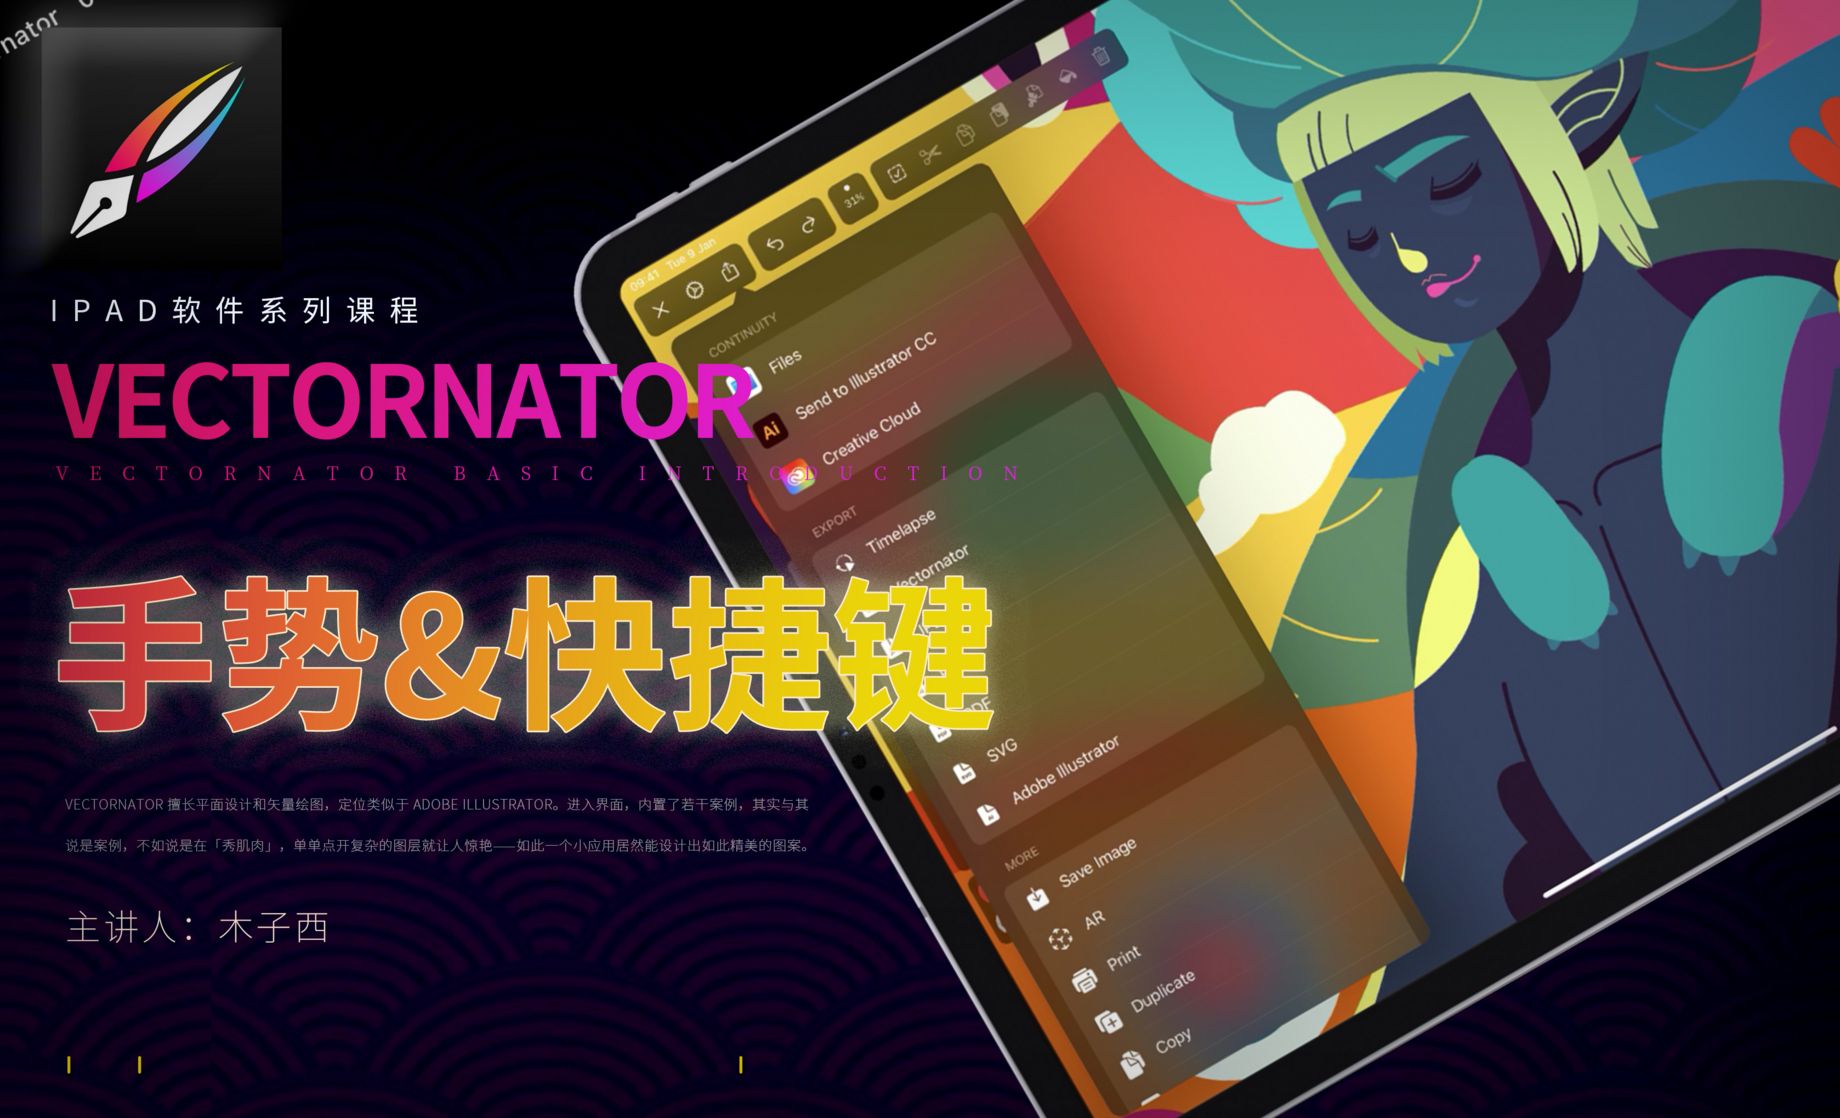 iPad Vectornator软件基础-手势与快捷键